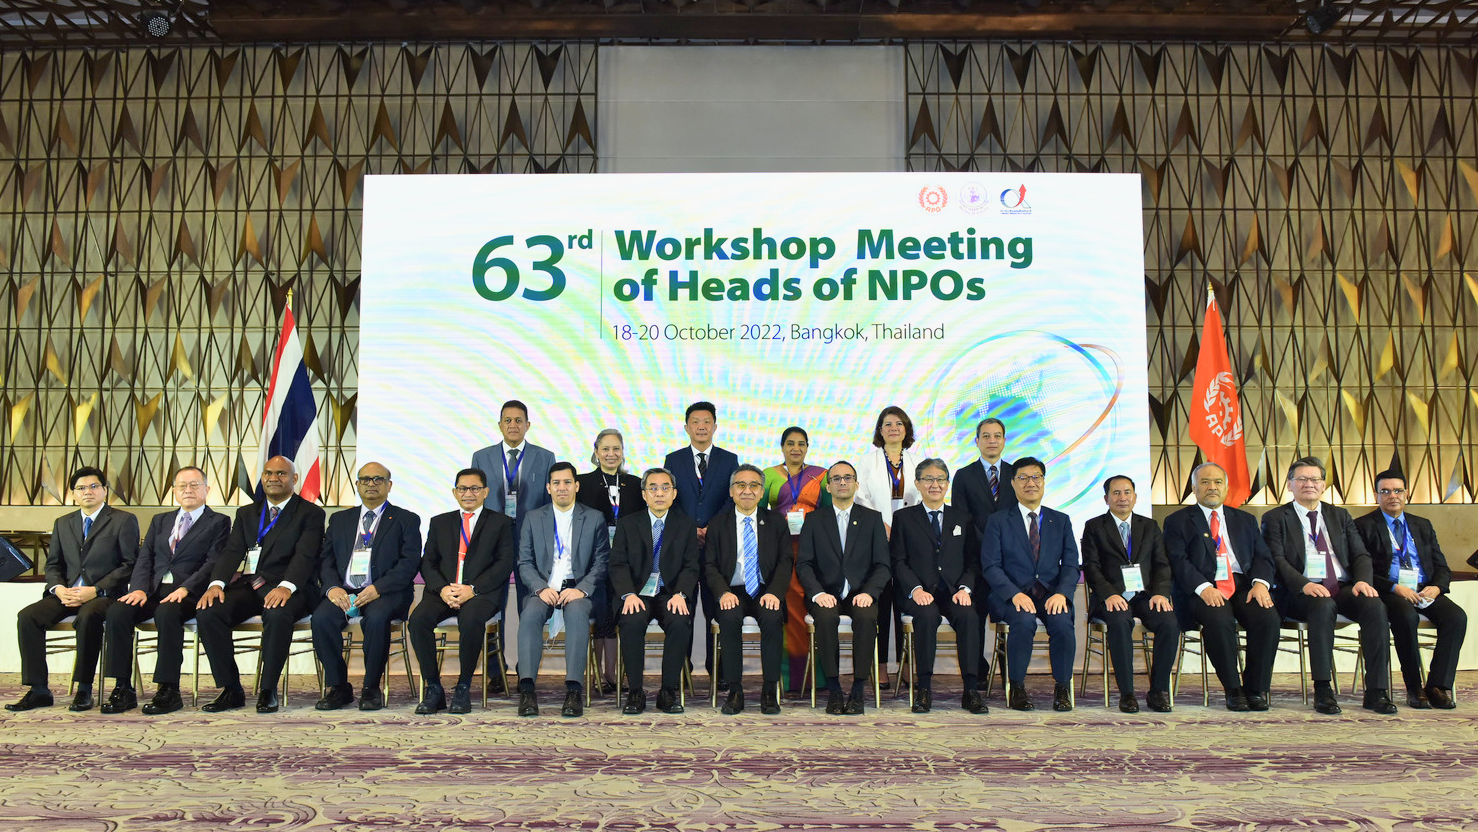 63rd Workshop Meeting of Heads of NPOs 